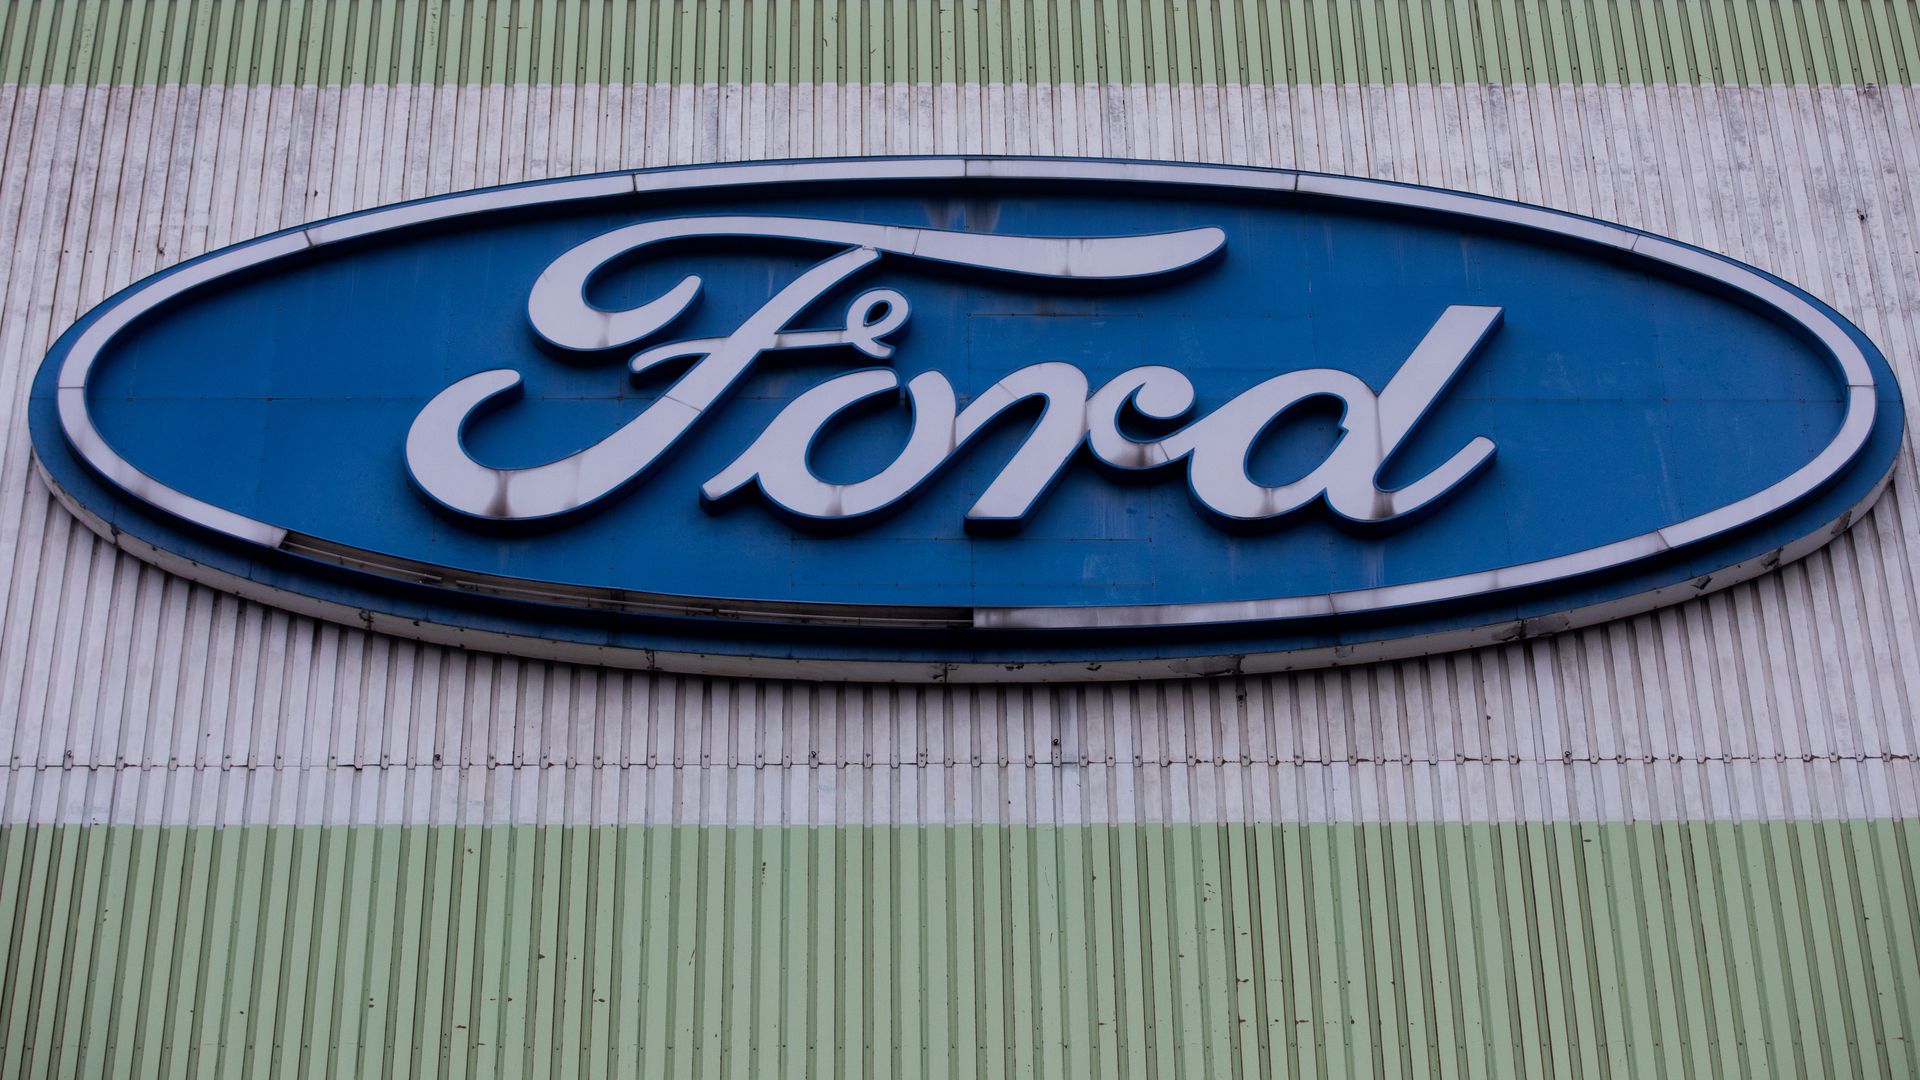 Ford logo.